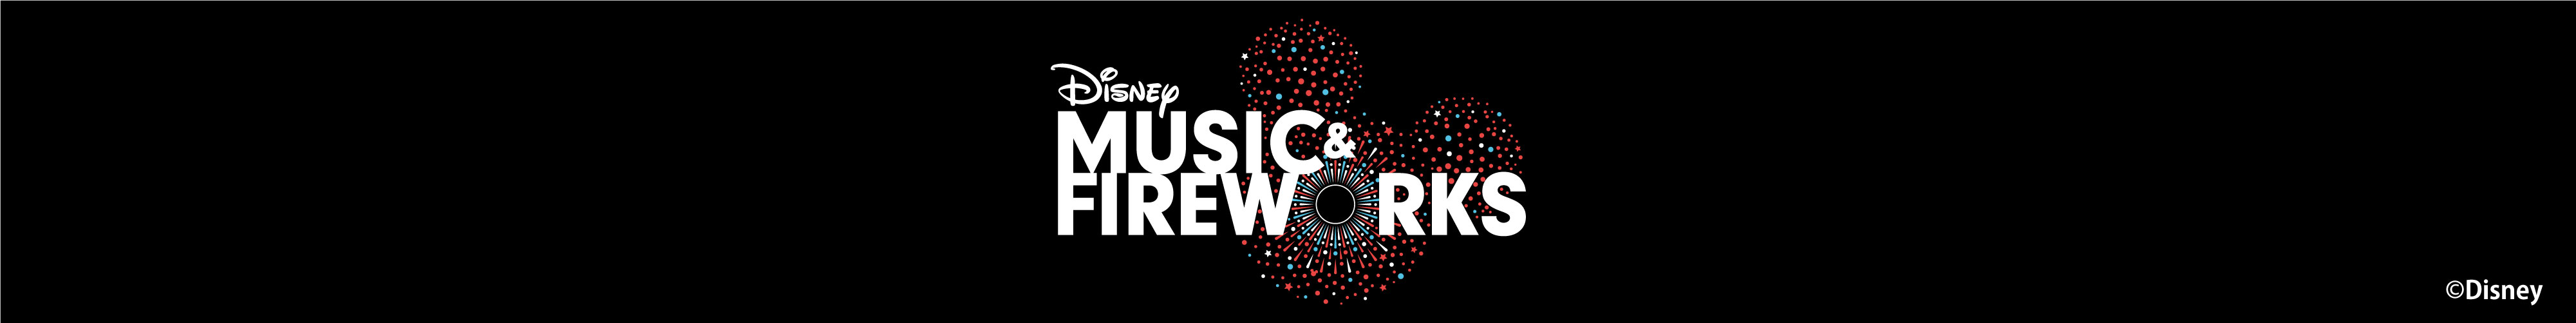 Disney Music & Fireworks